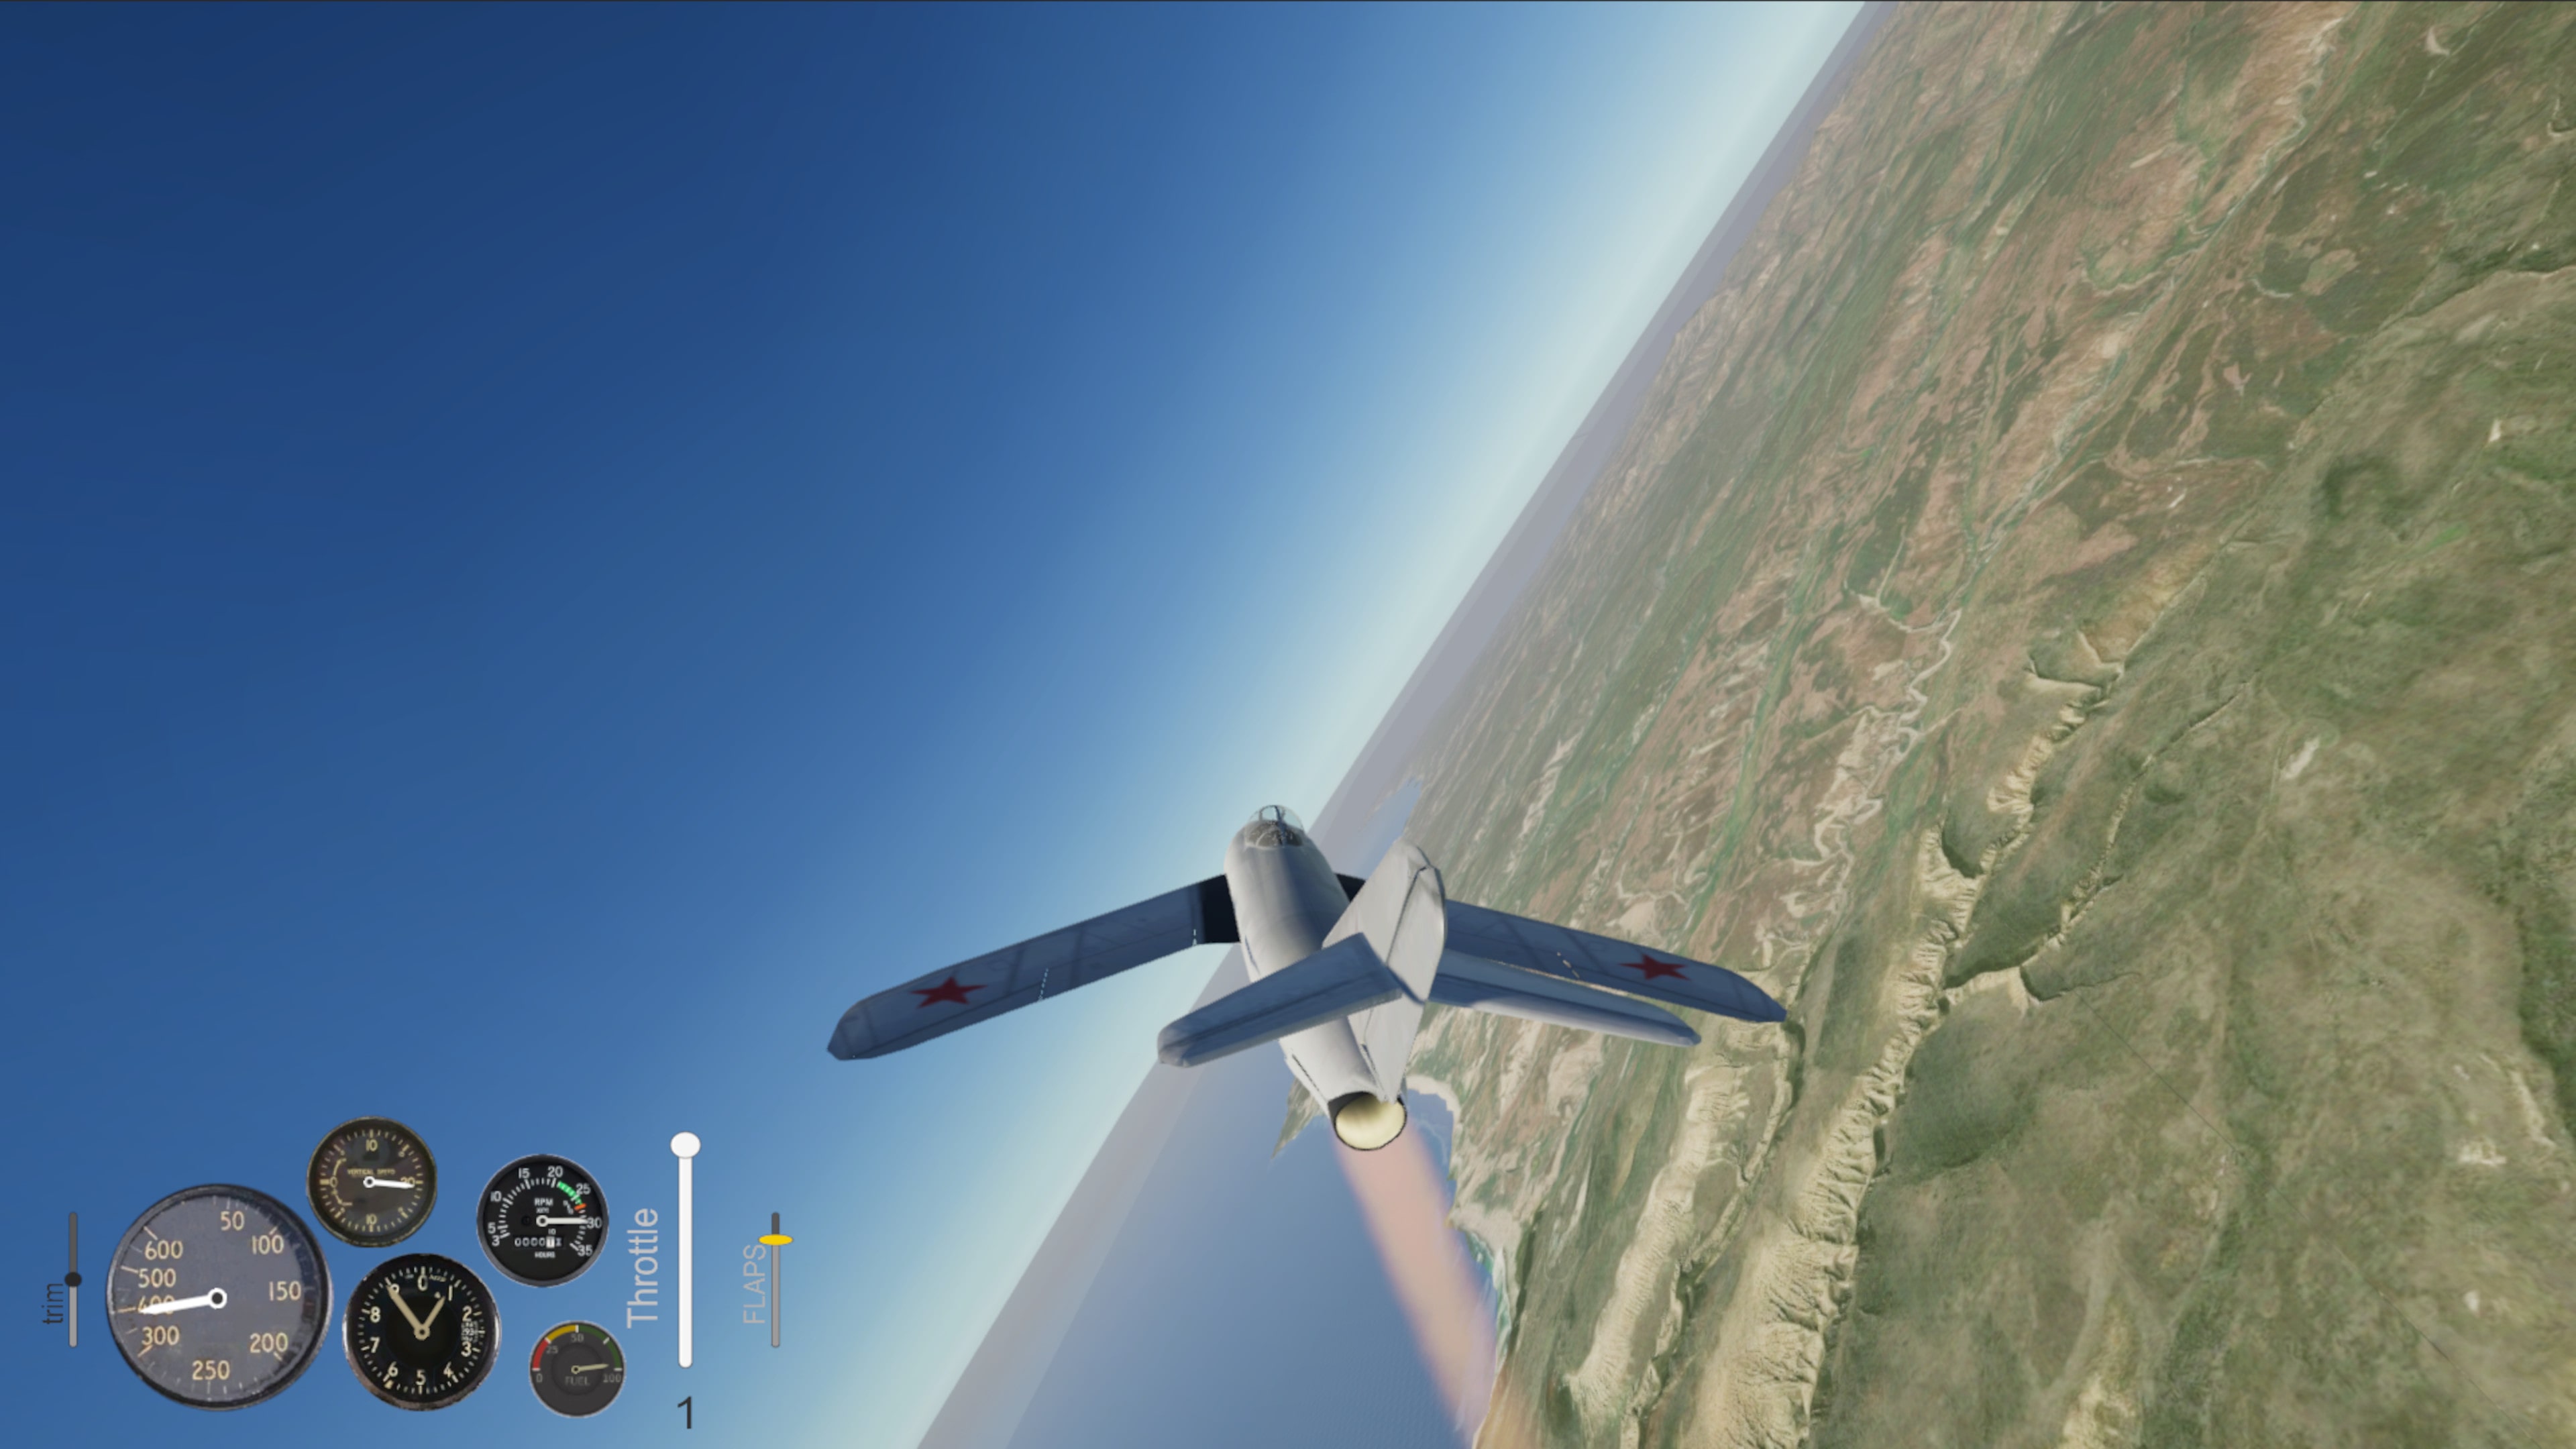 Island Flight Simulator PlayStation 4 (PS4) Brand New/Sealed